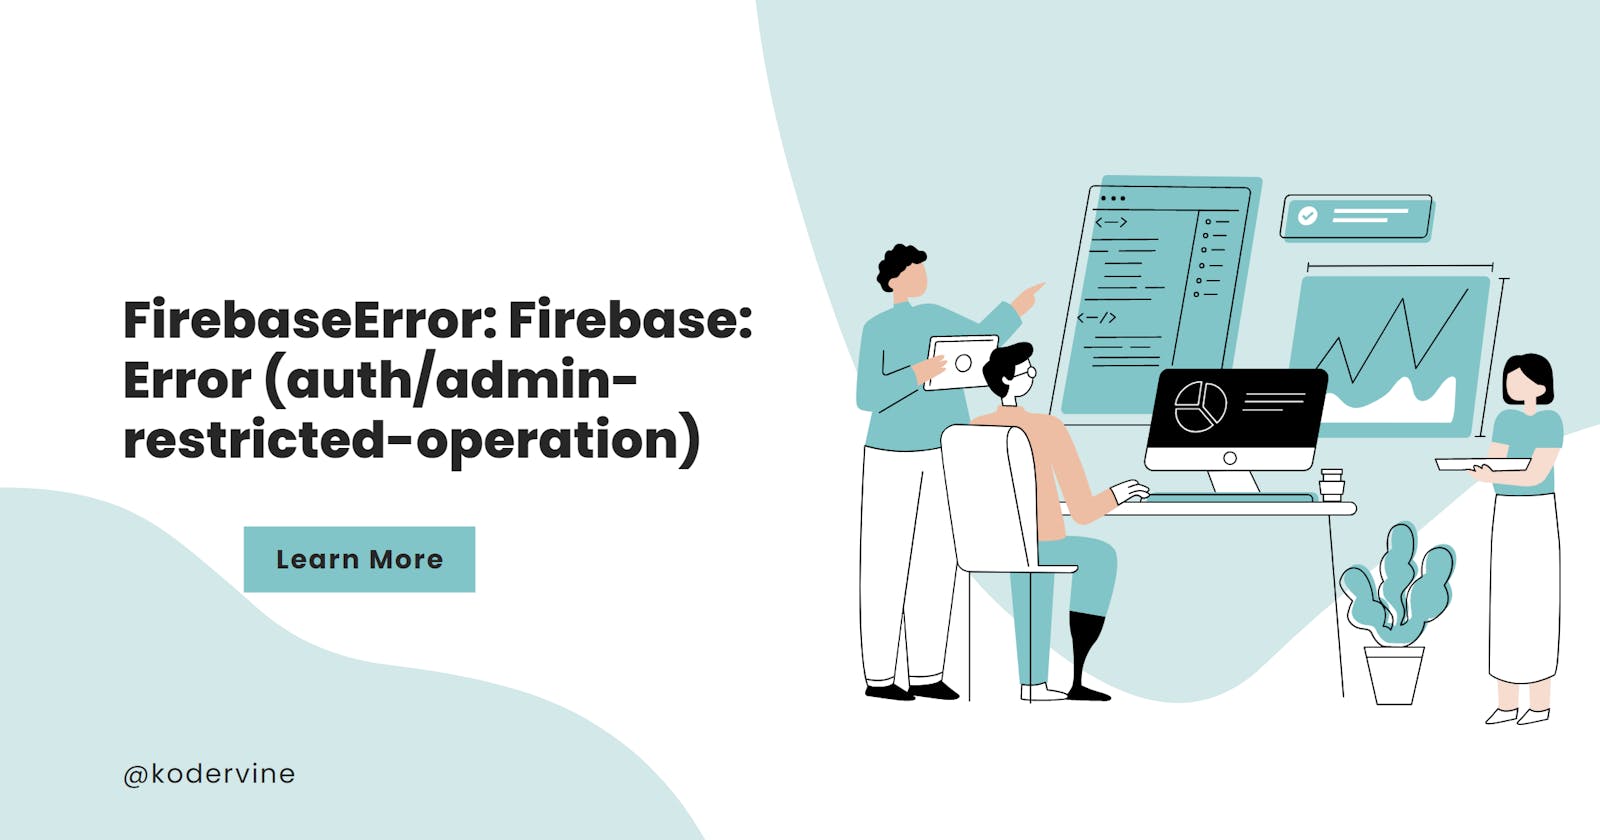 FirebaseError: auth/admin-restricted-operation